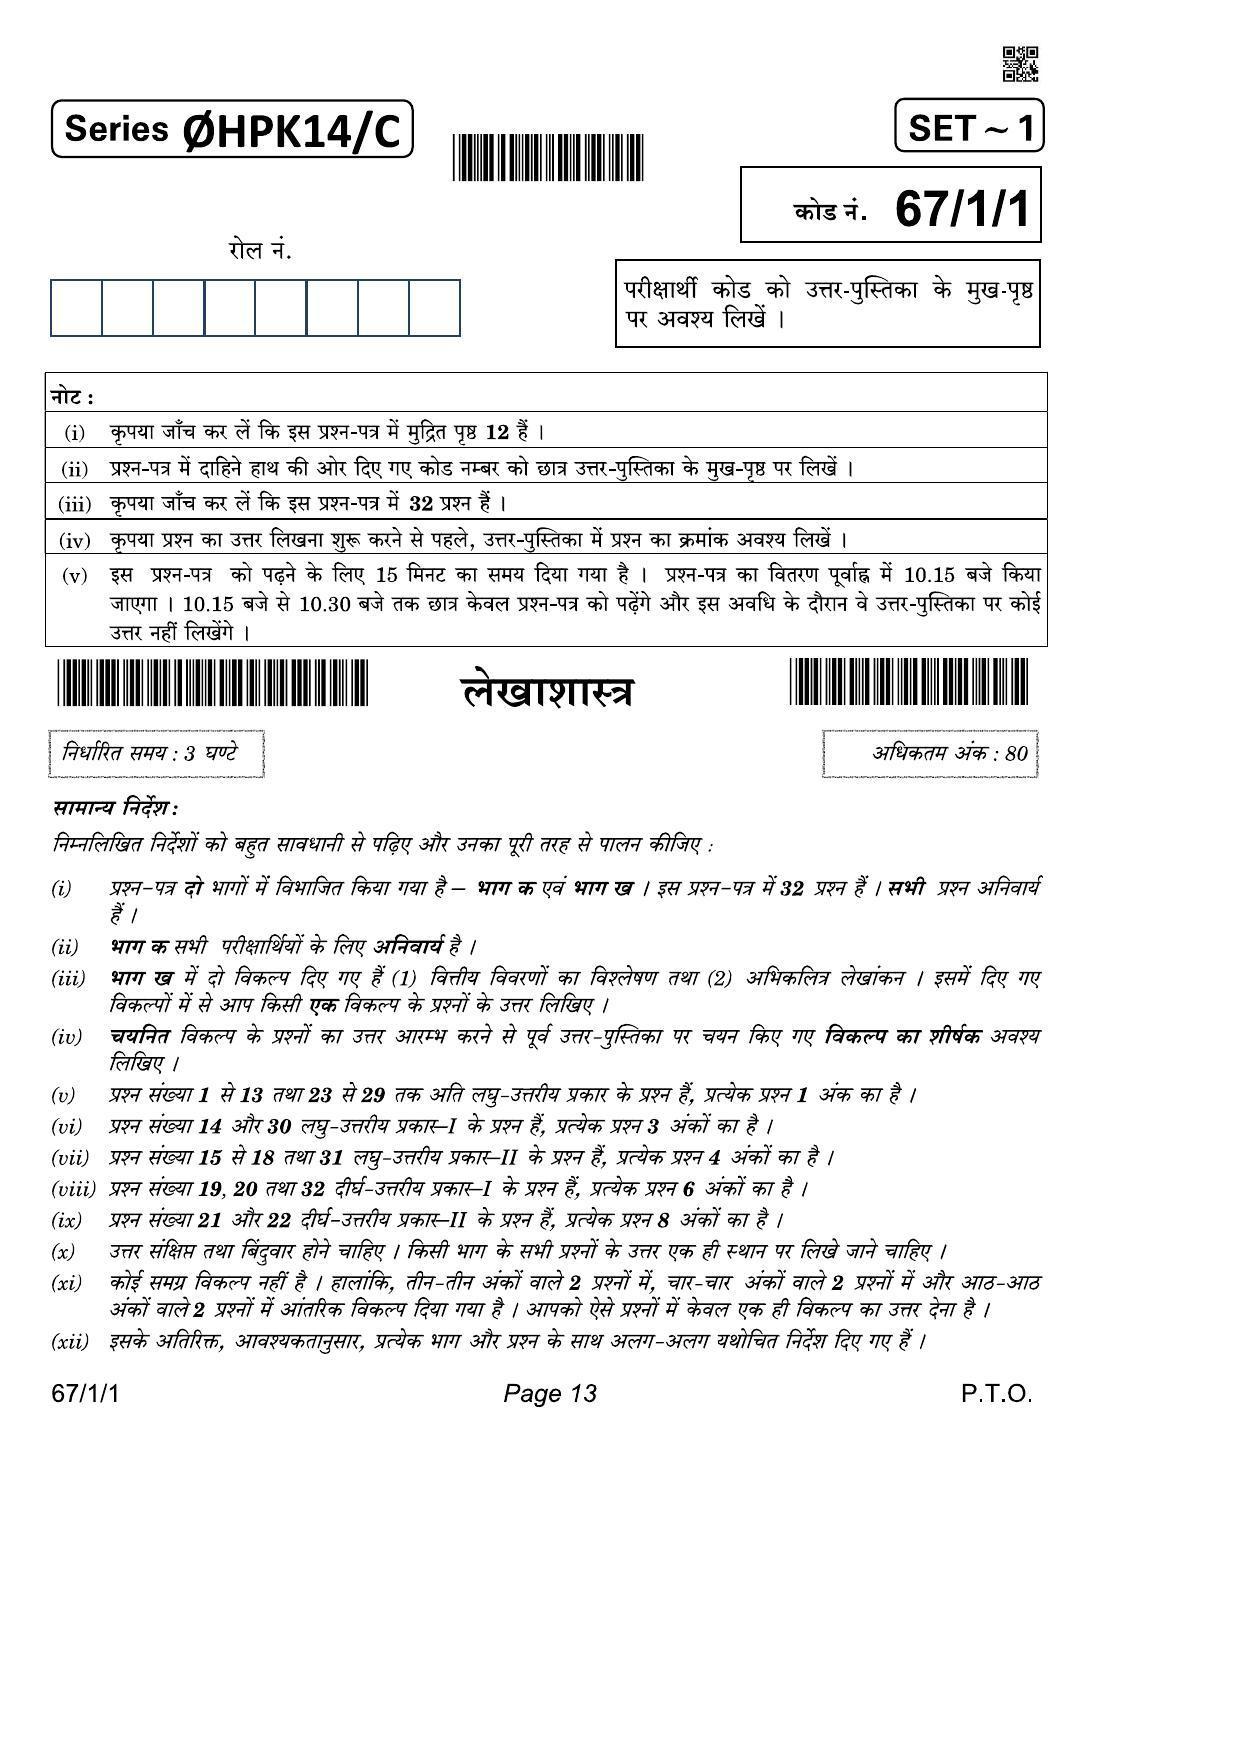 CBSE Class 12 QP_055_Accountancy 2021 Compartment Question Paper - Page 13